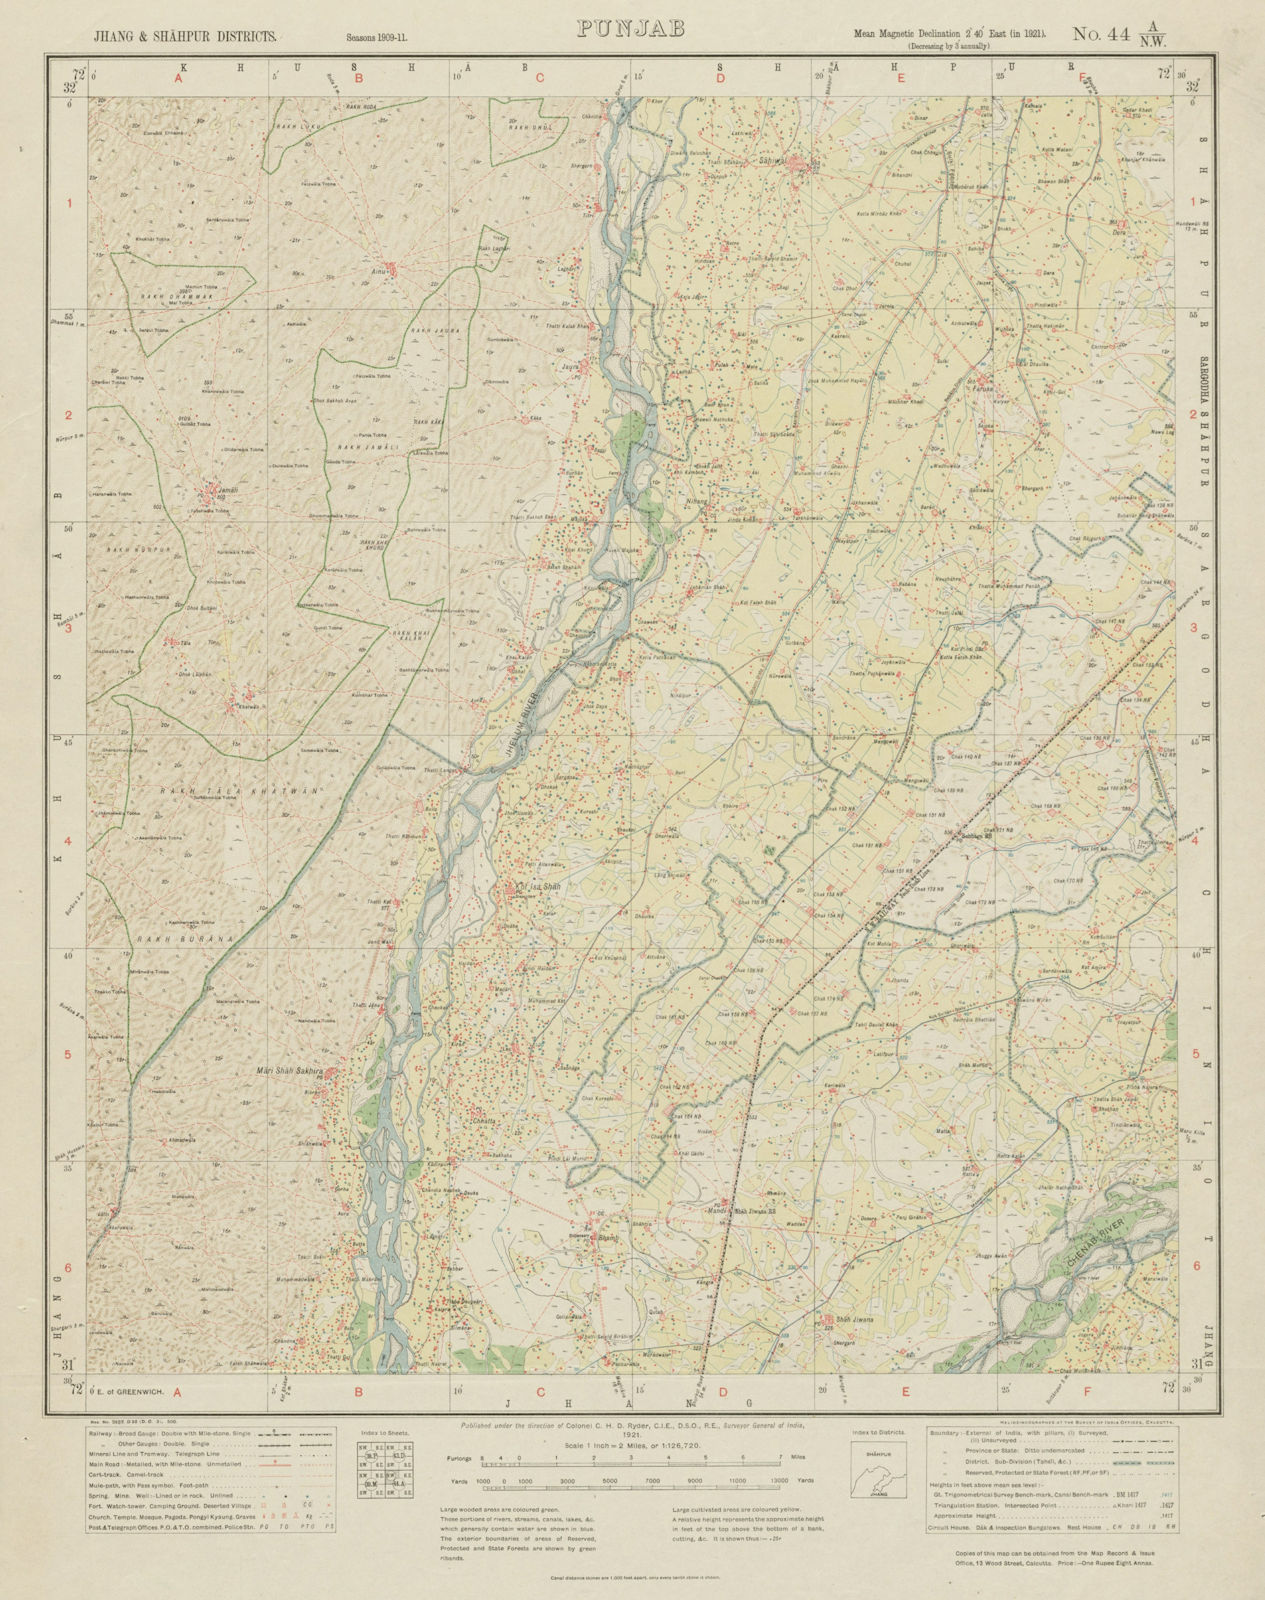 SURVEY OF INDIA 44 A/NW Pakistan Punjab Jamali Mari Shah Sakhira Jhelum 1921 map